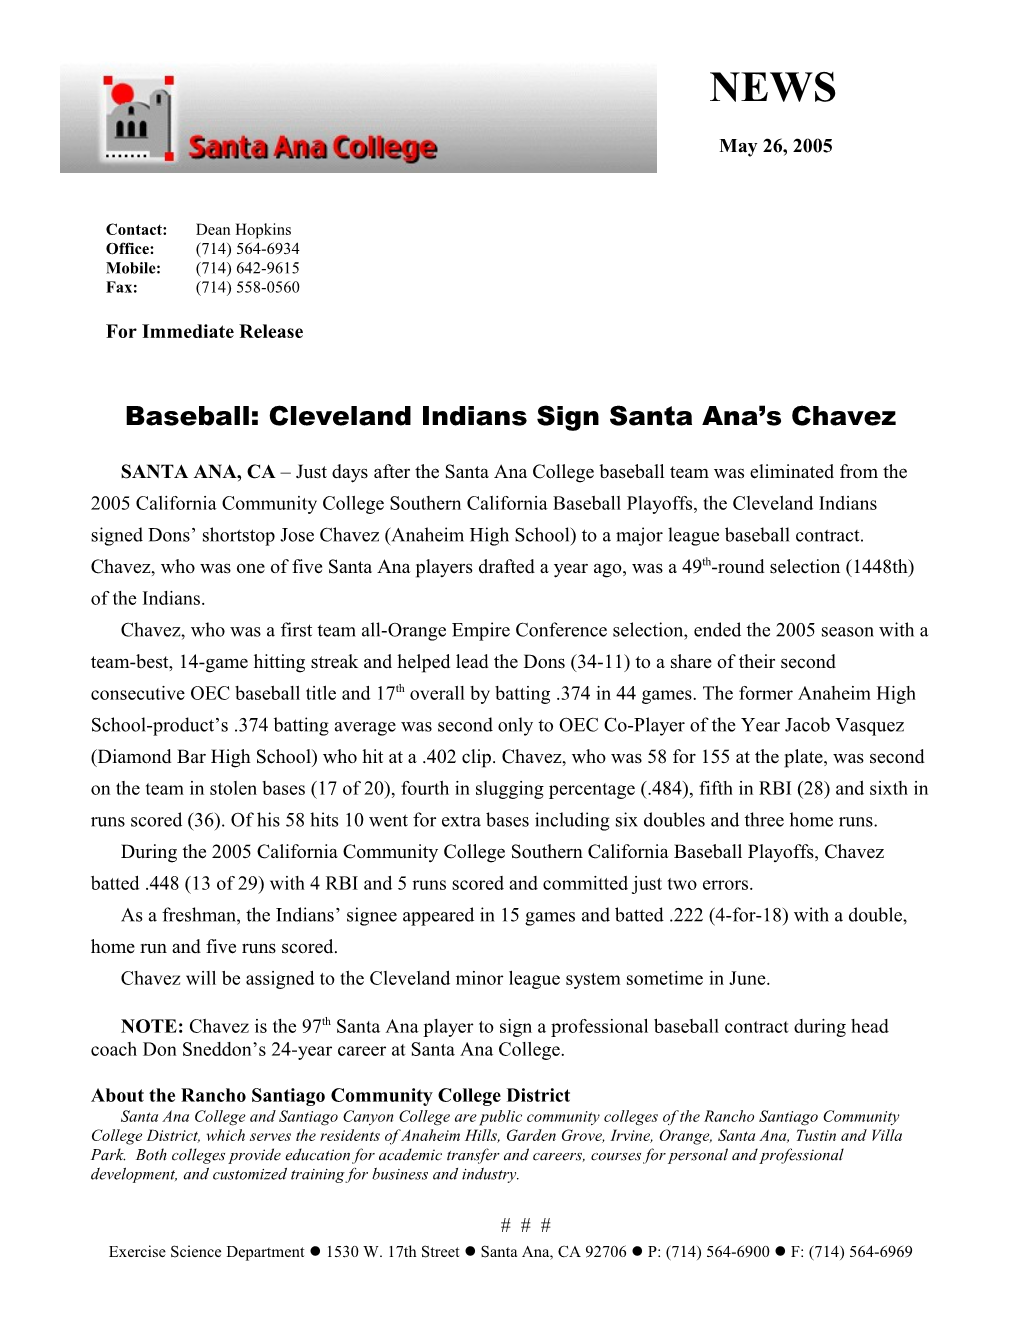 Baseball: Cleveland Indians Sign Santa Ana S Chavez